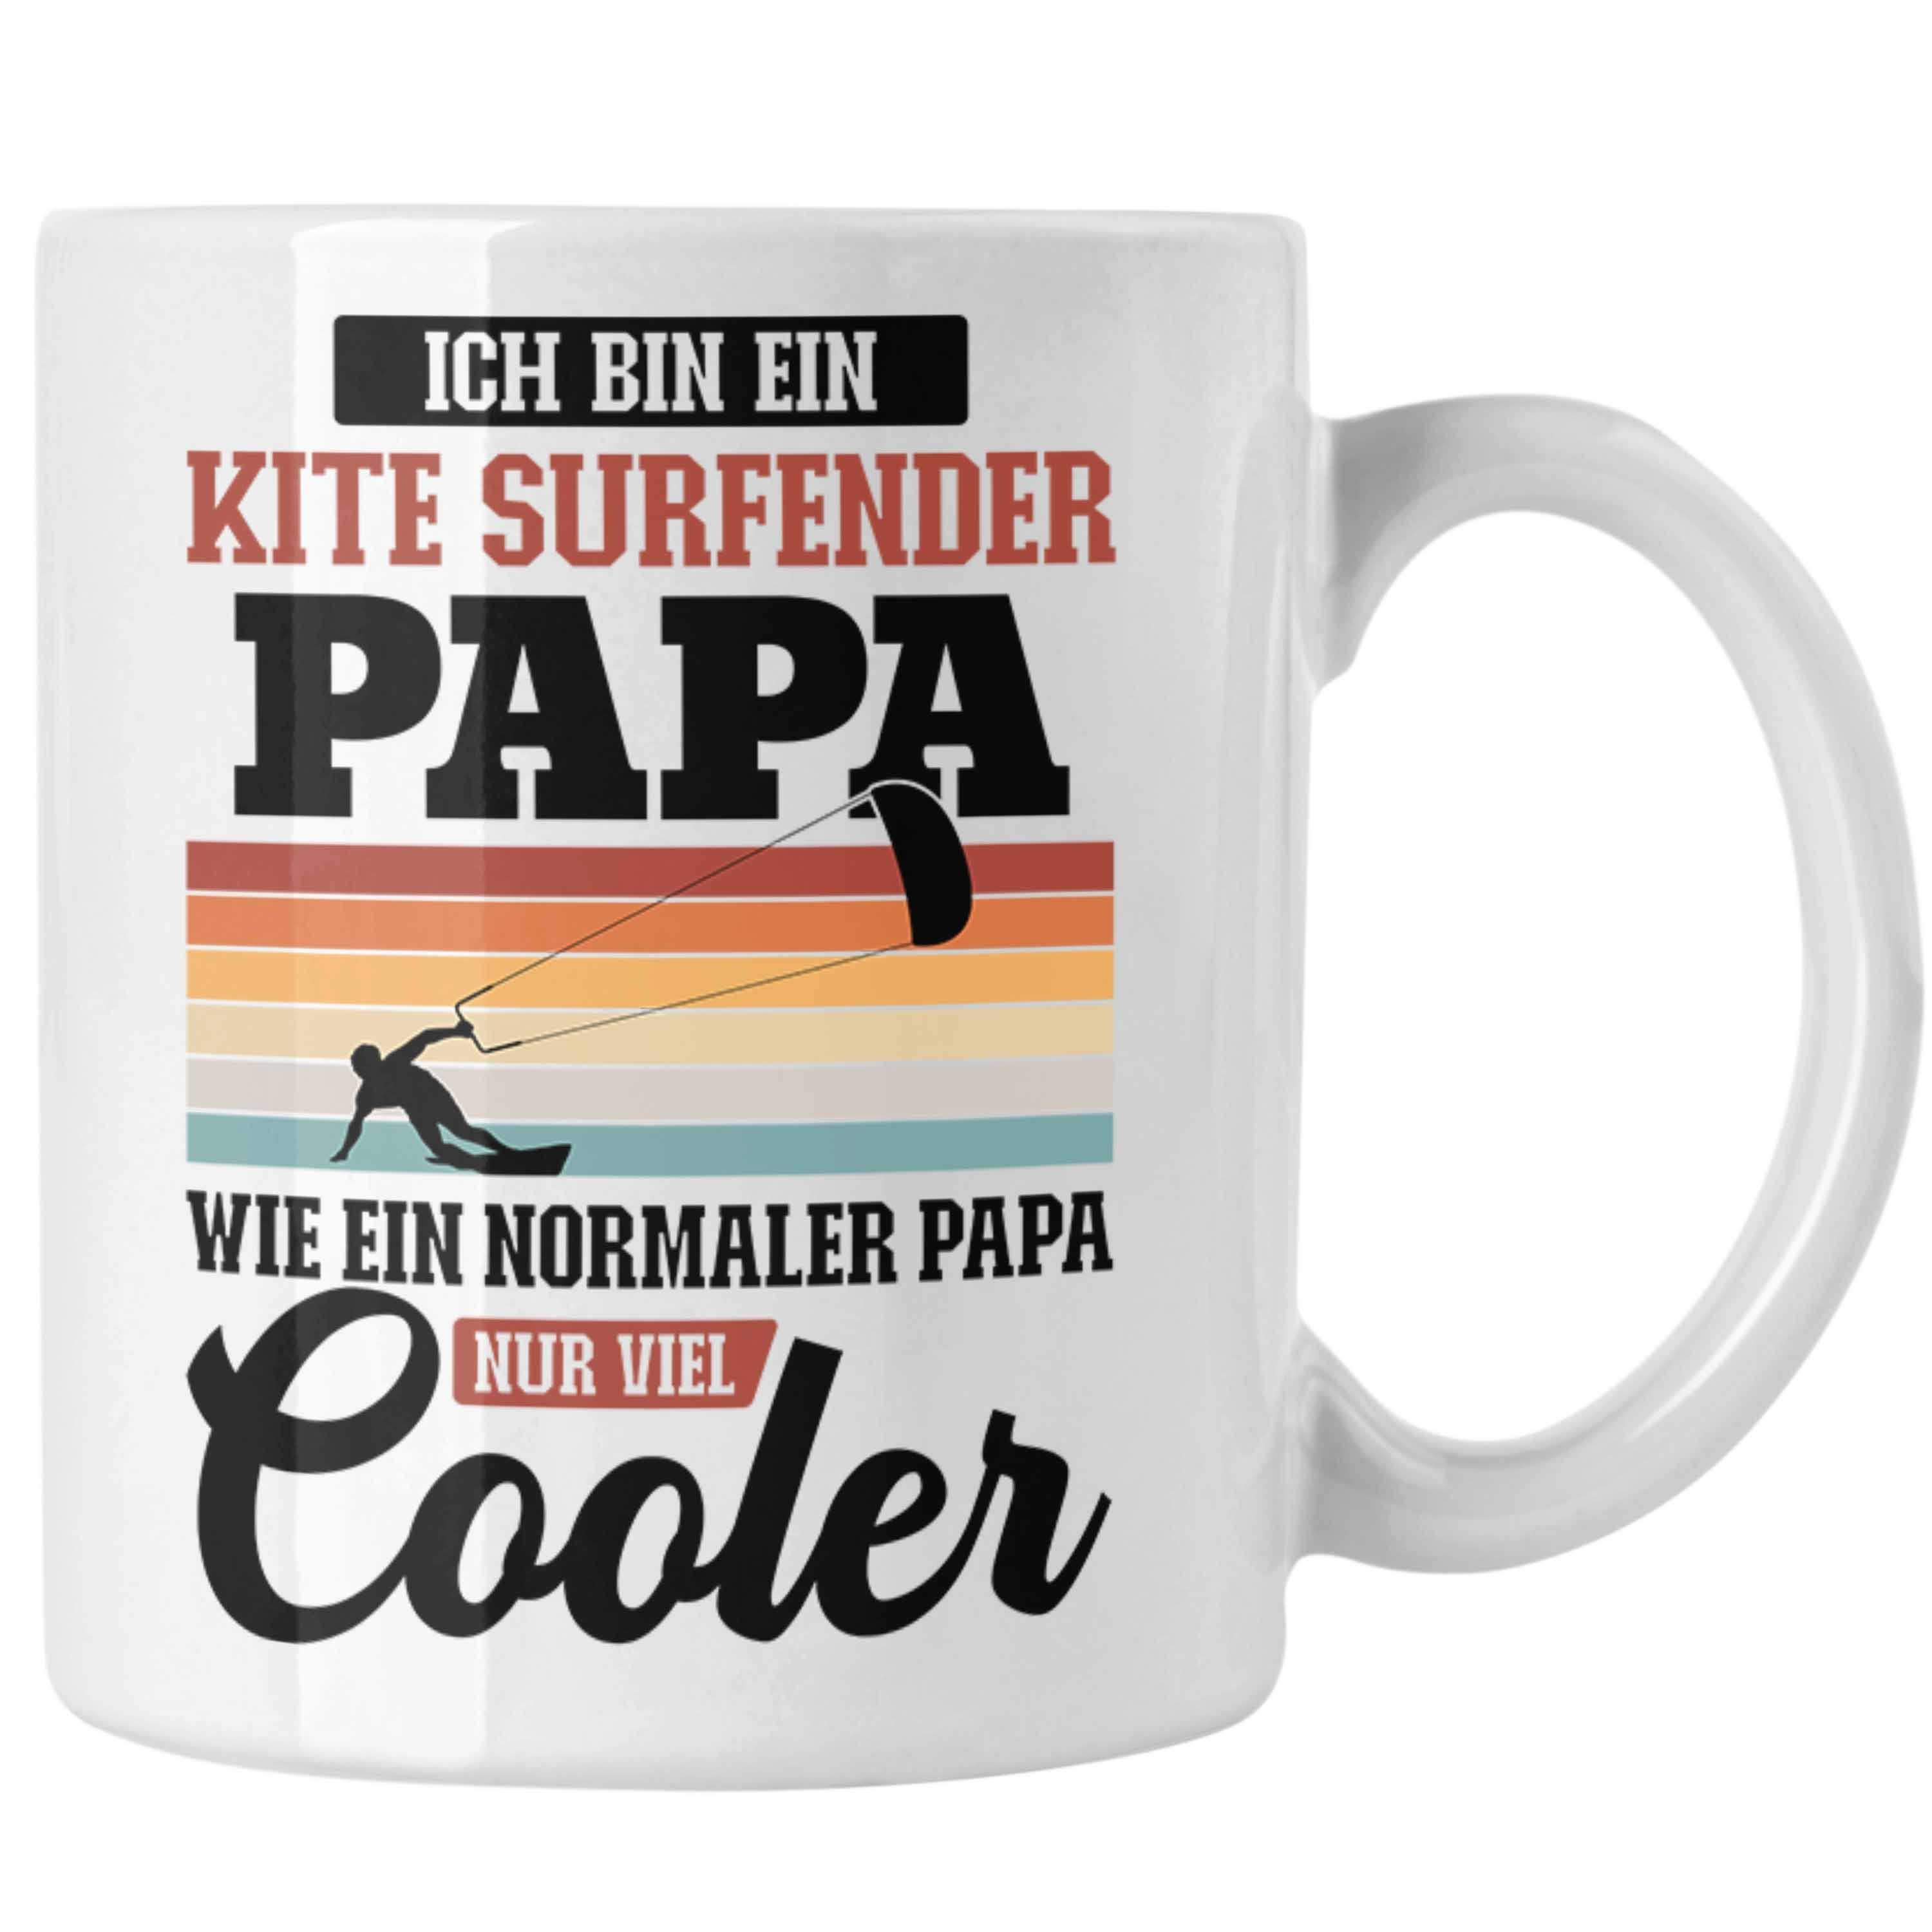 Trendation Tasse Trendation - Kitesurf Papa Kitesurfen Geschenk Tasse Vater Kite Surfender Papa Kitesurfing Weiss